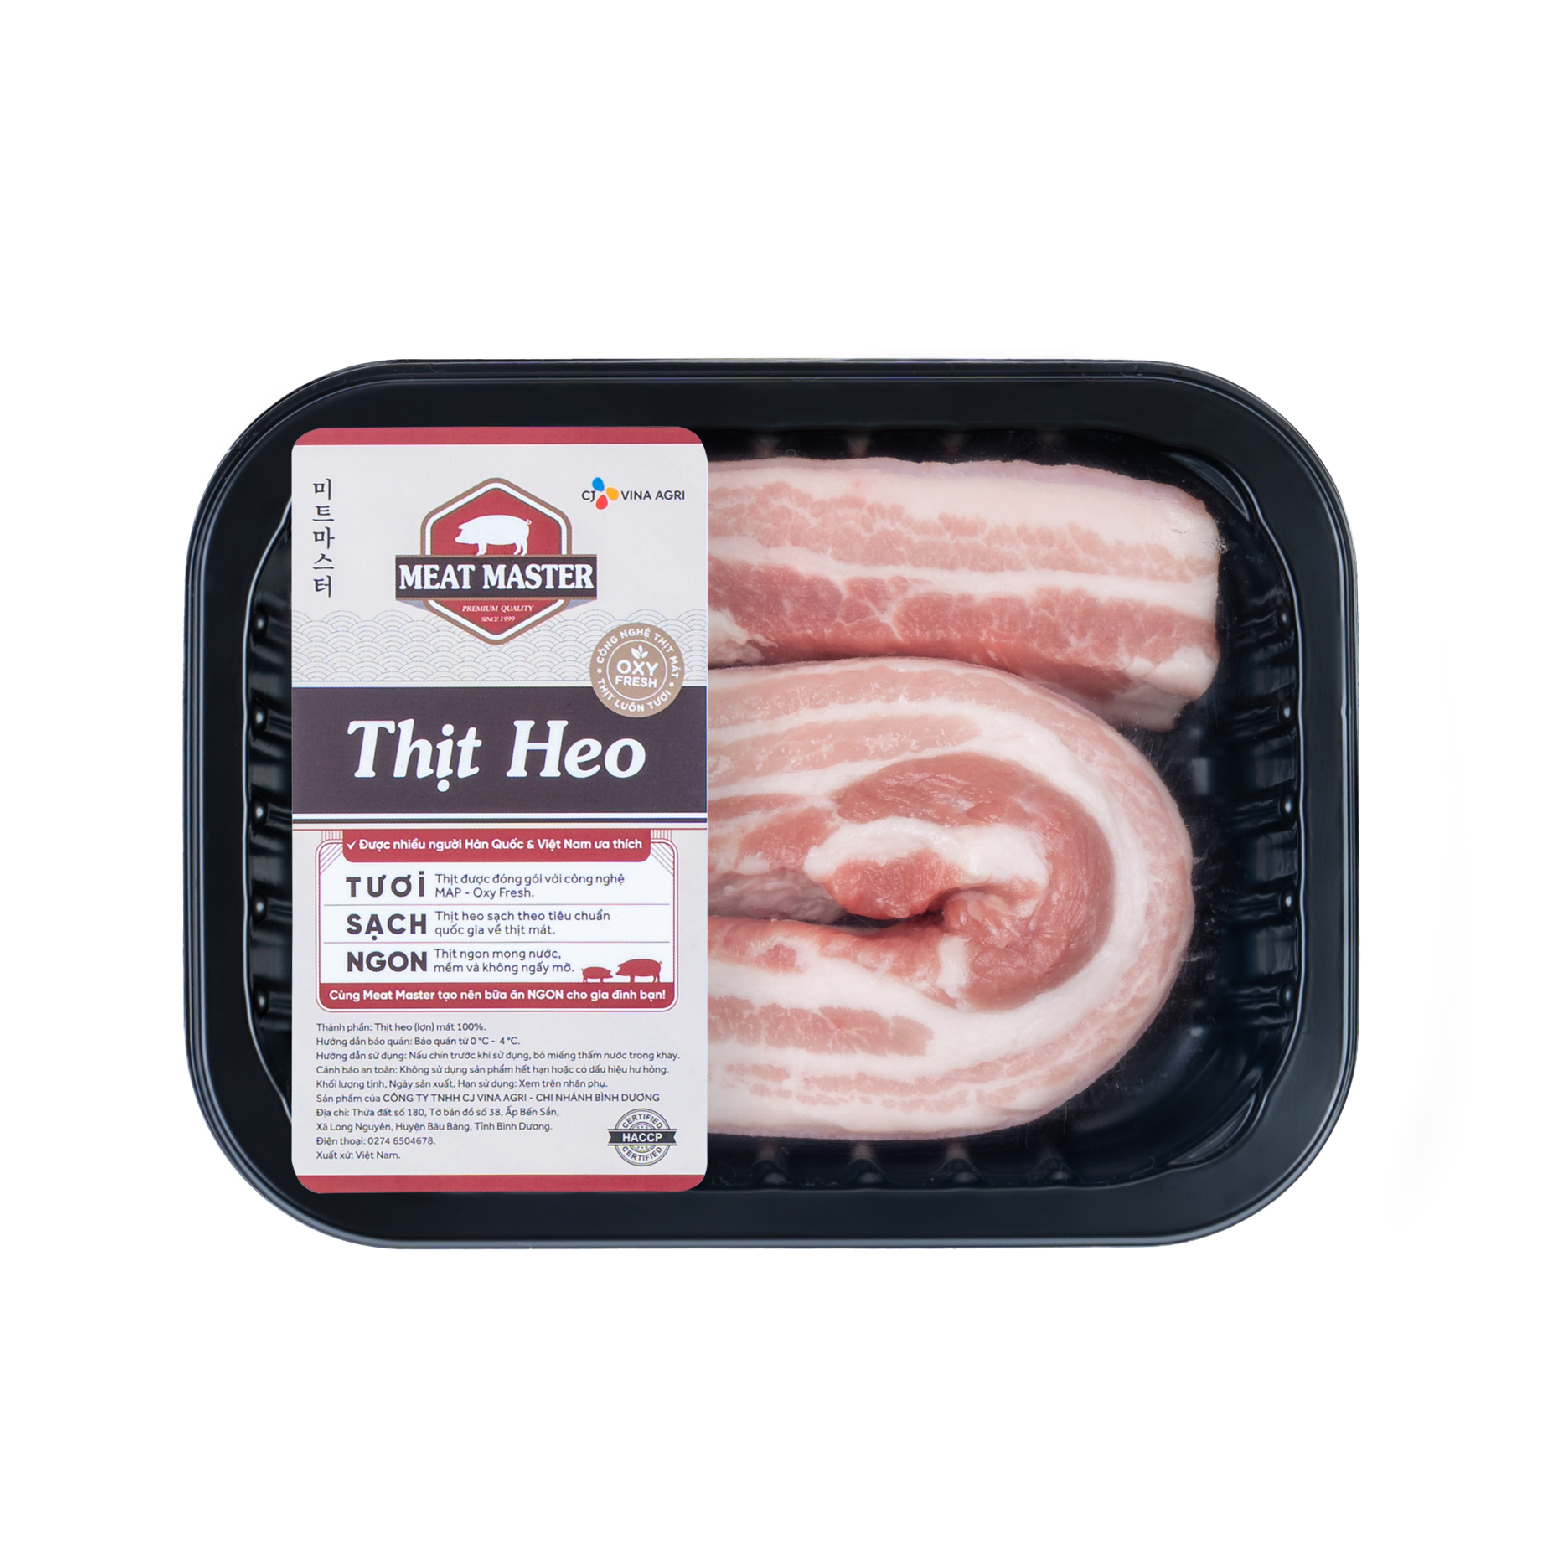 Combo Heo tiết kiệm Thịt xay - Ba rọi Meat Master ( 400 G ) - Giao nhanh